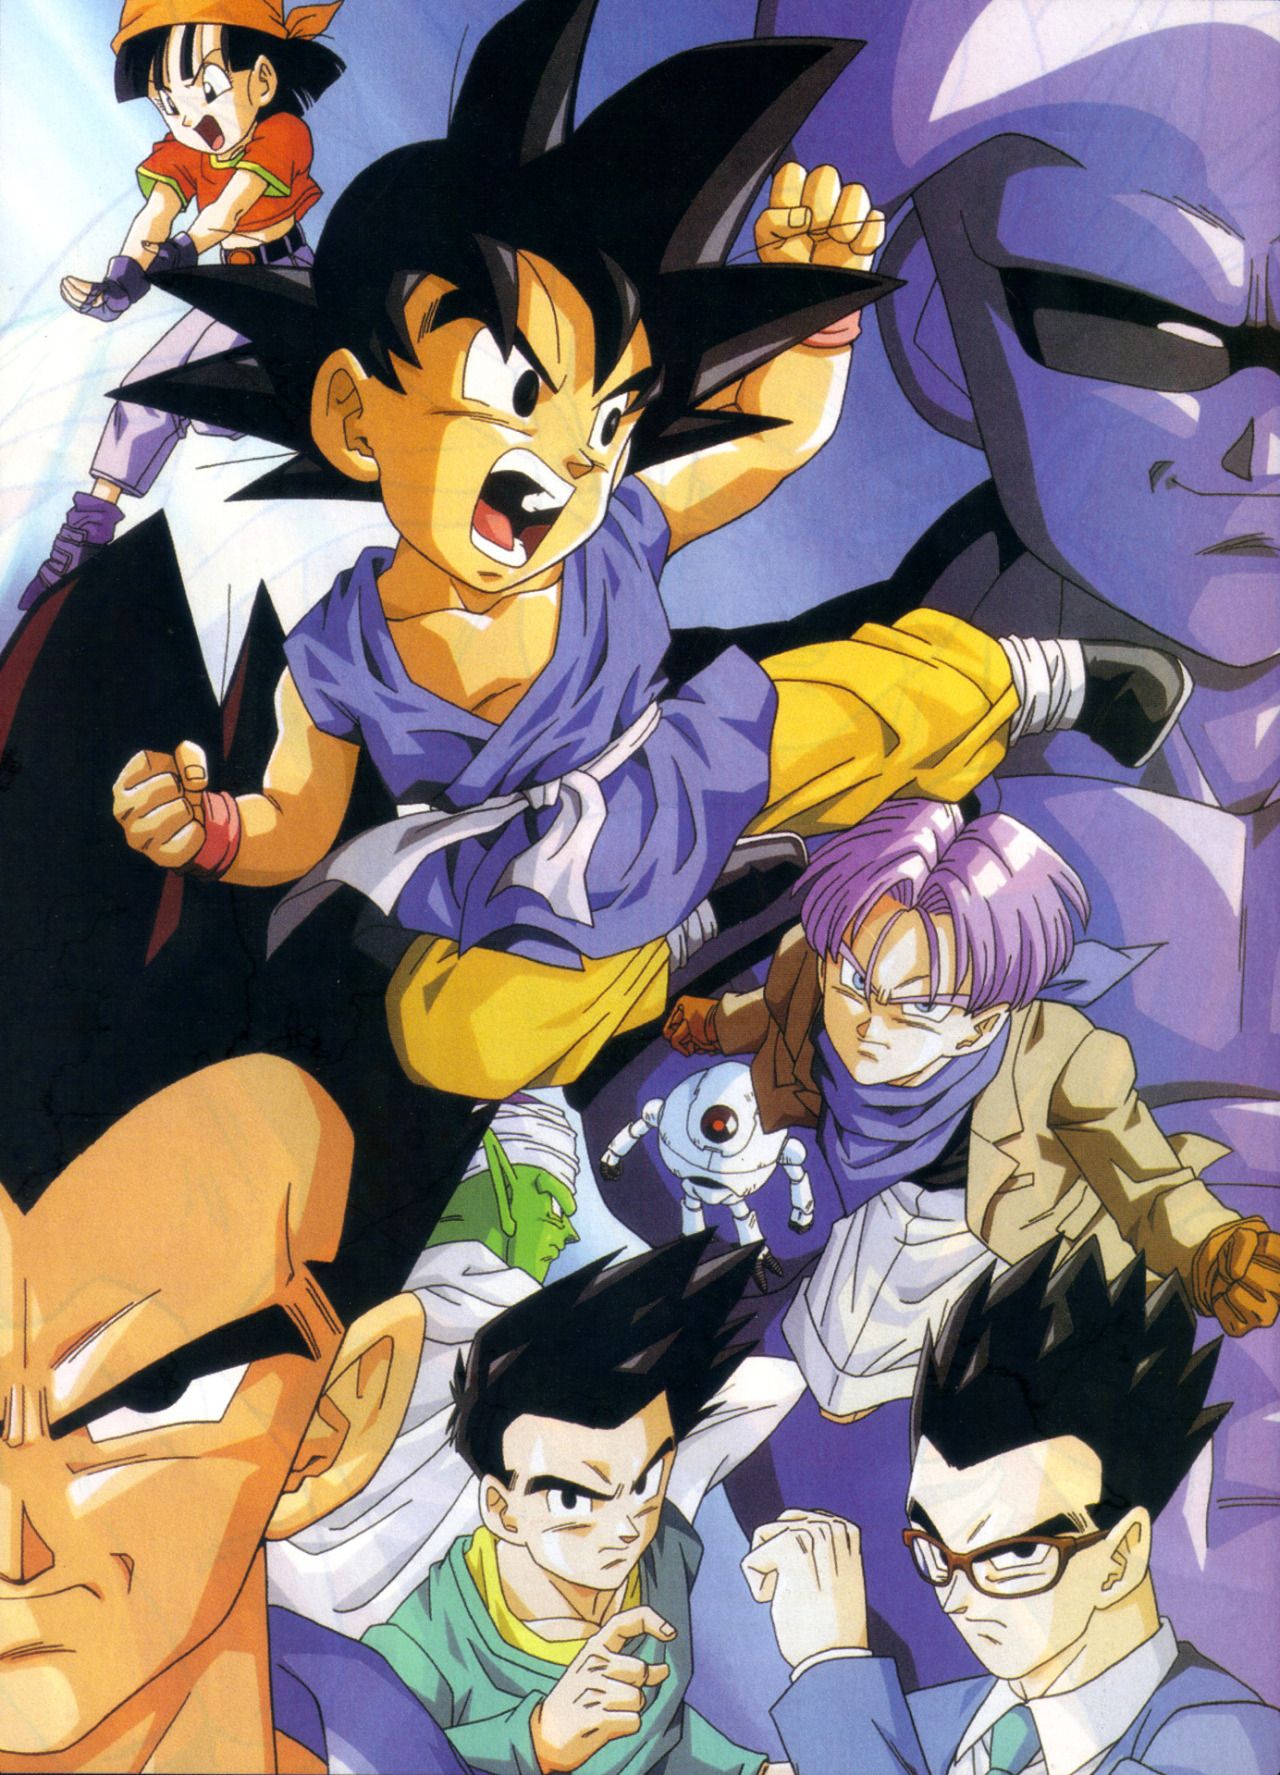 Dragon Ball GT - Anime (1996) - O Vício